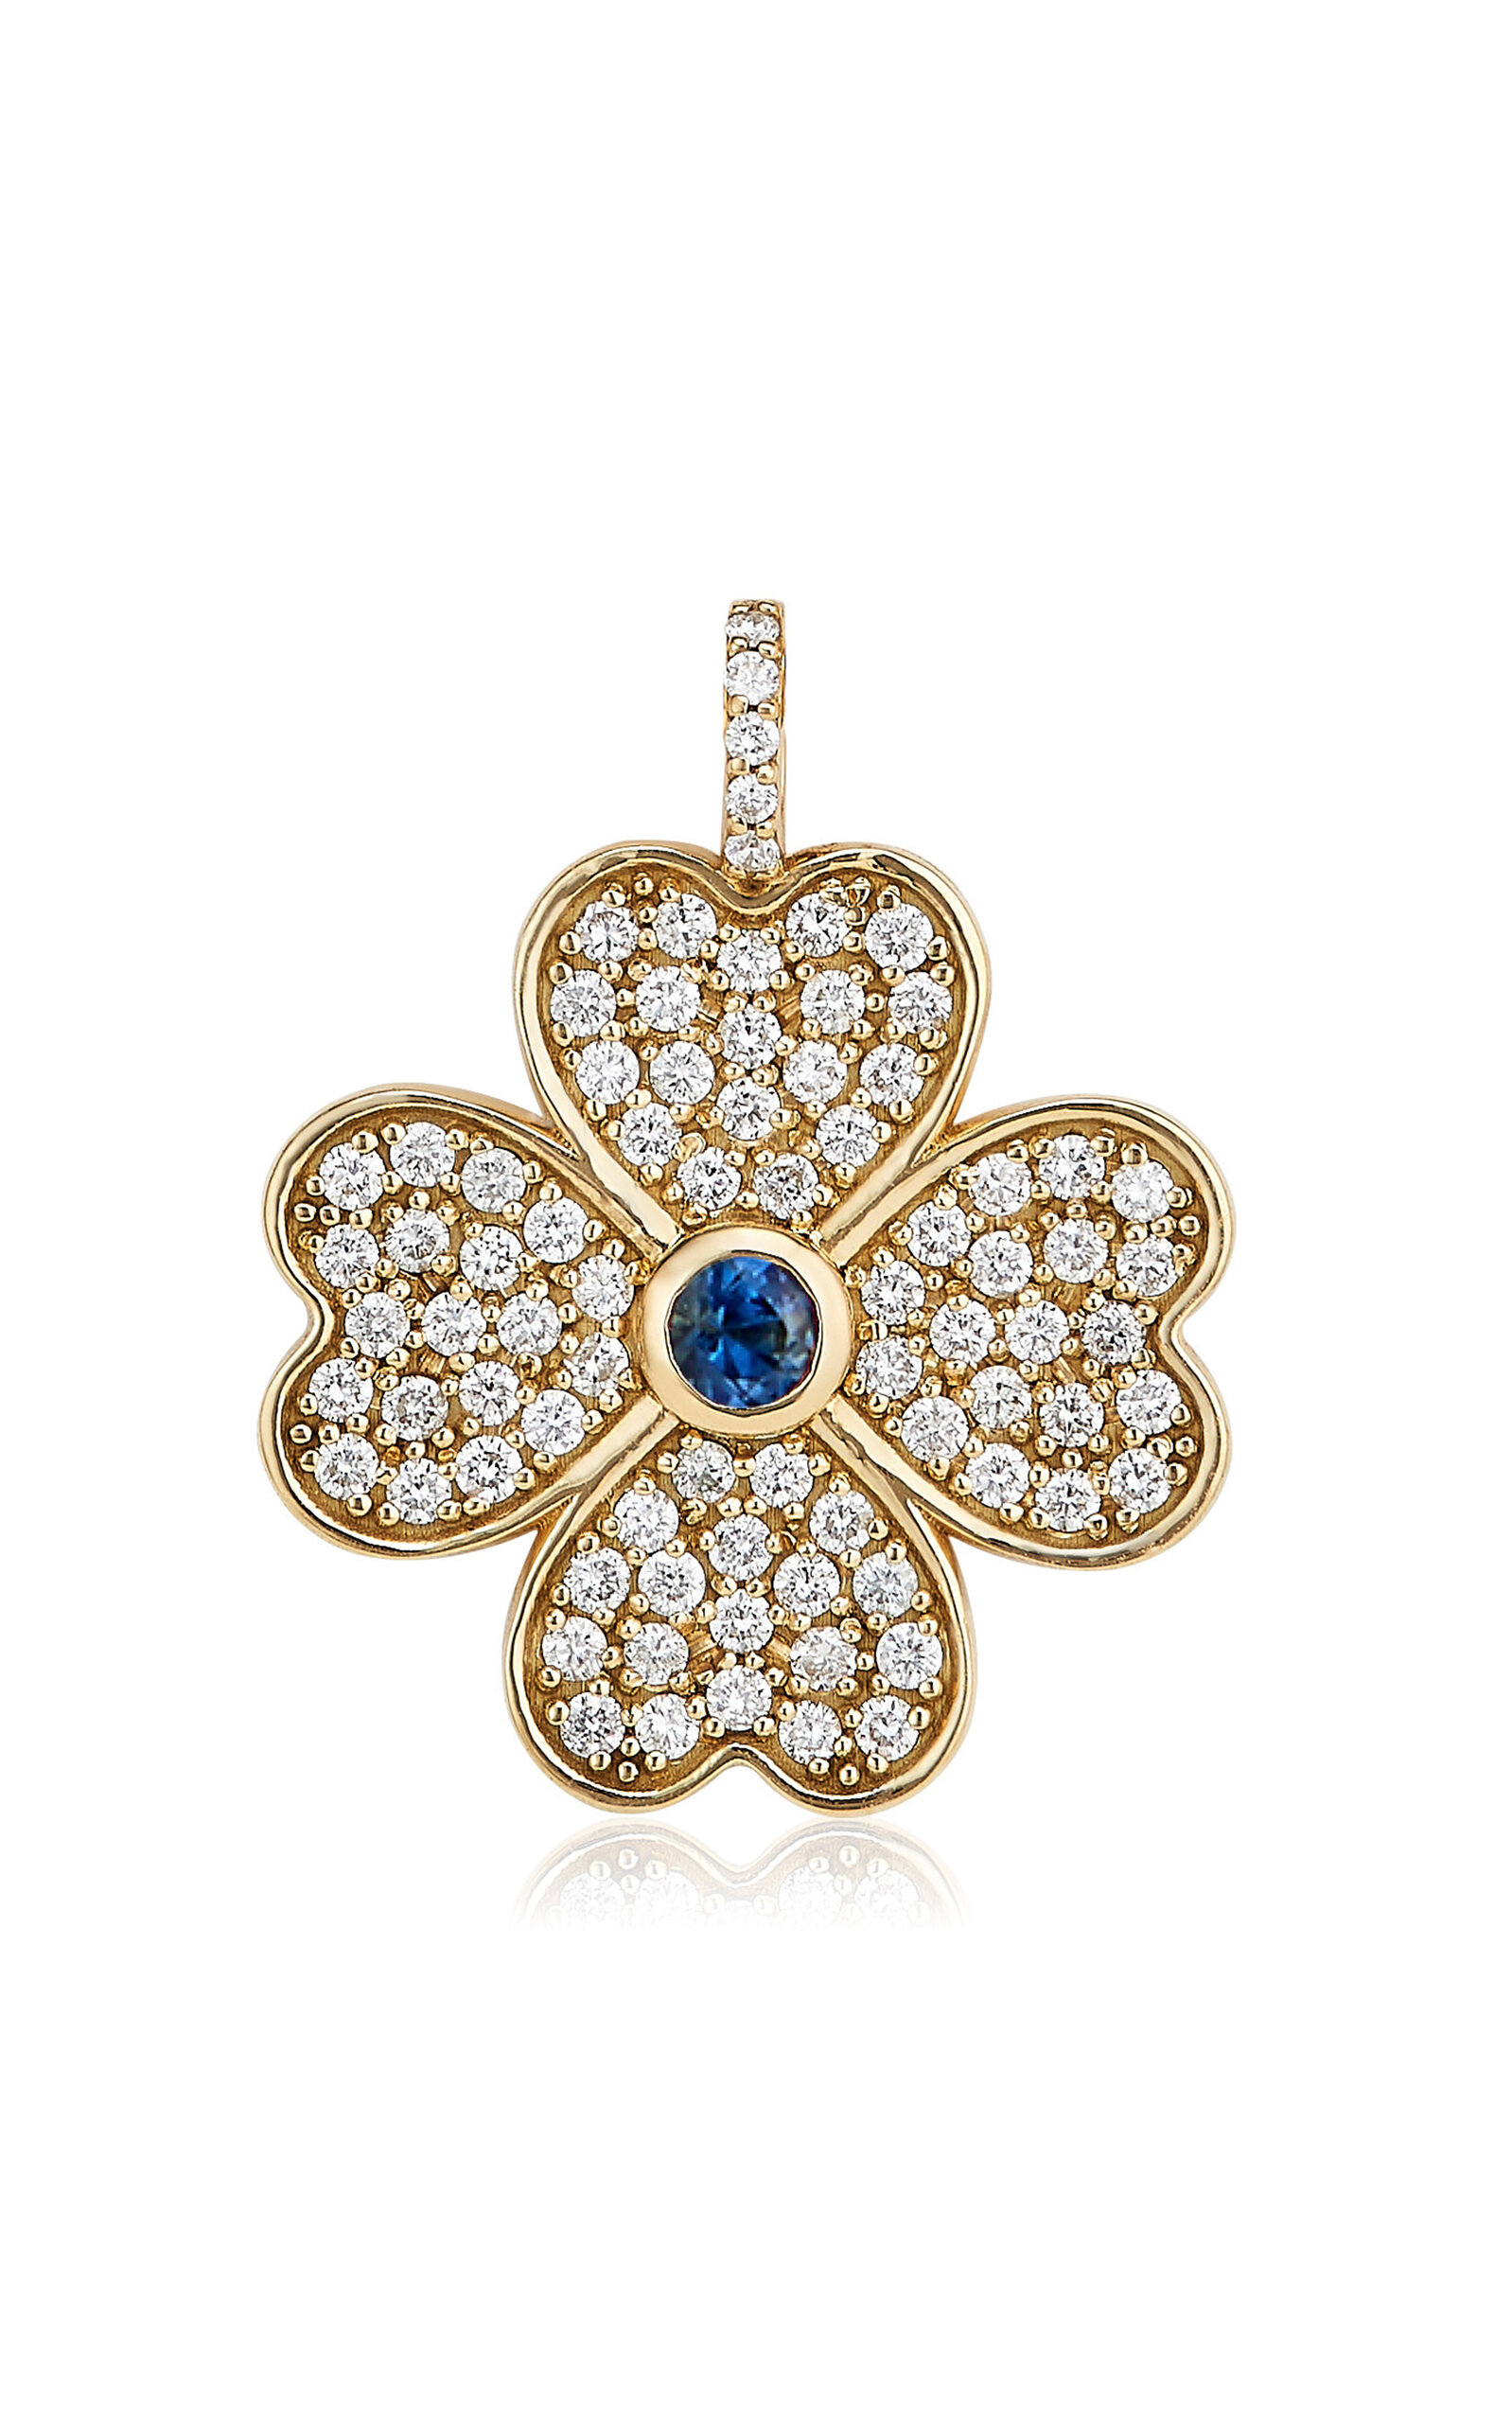 18K Yellow Gold; Diamond And Sapphire Clover Charm